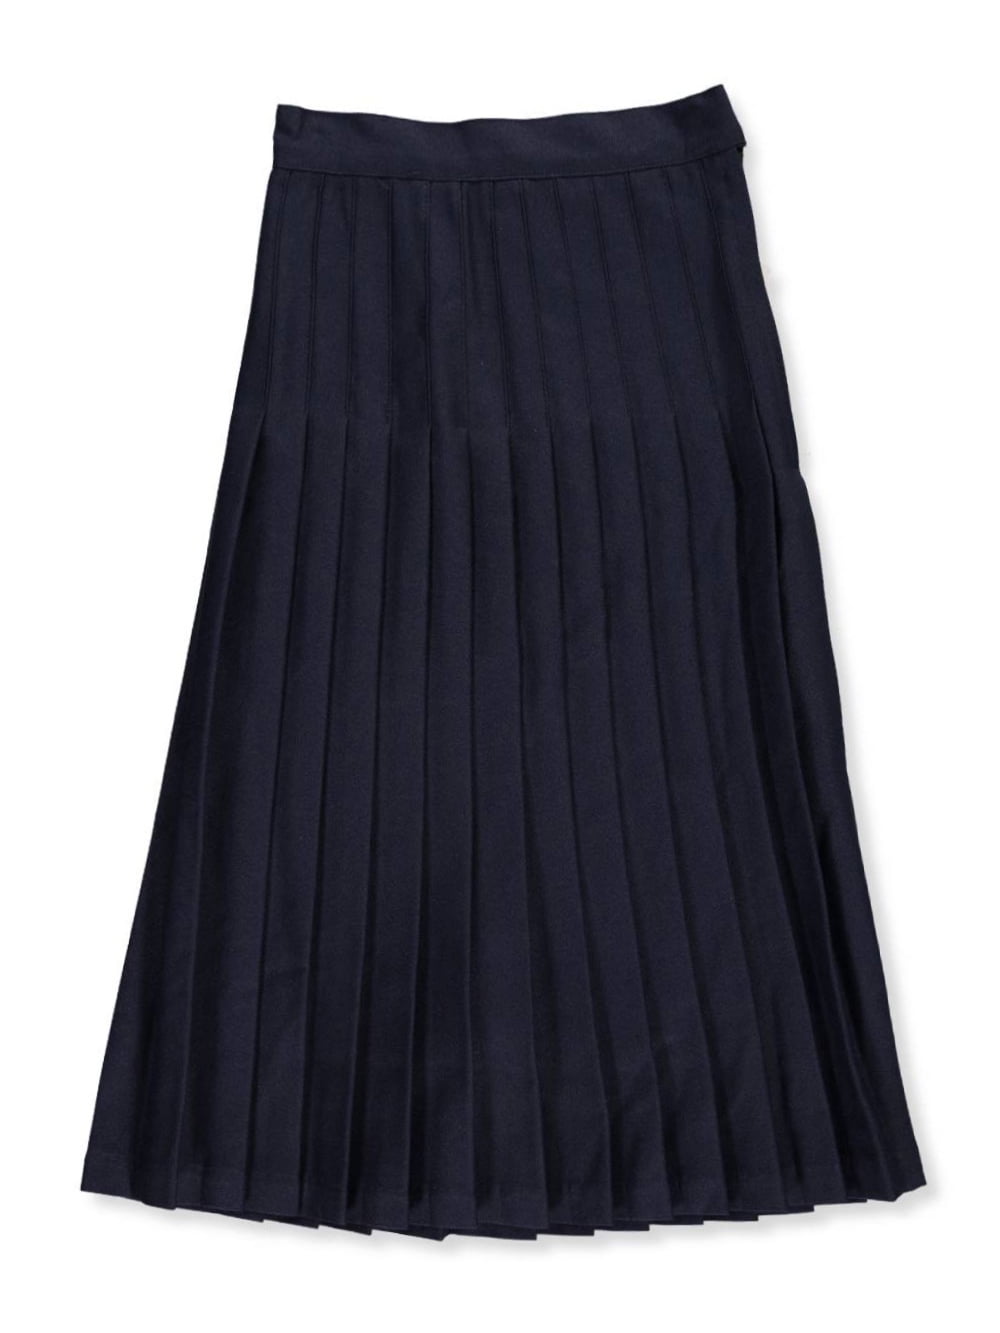 Cookie's Brand Big Girls' Long Pleated Skirt (Sizes 7 - 20) - Walmart.com